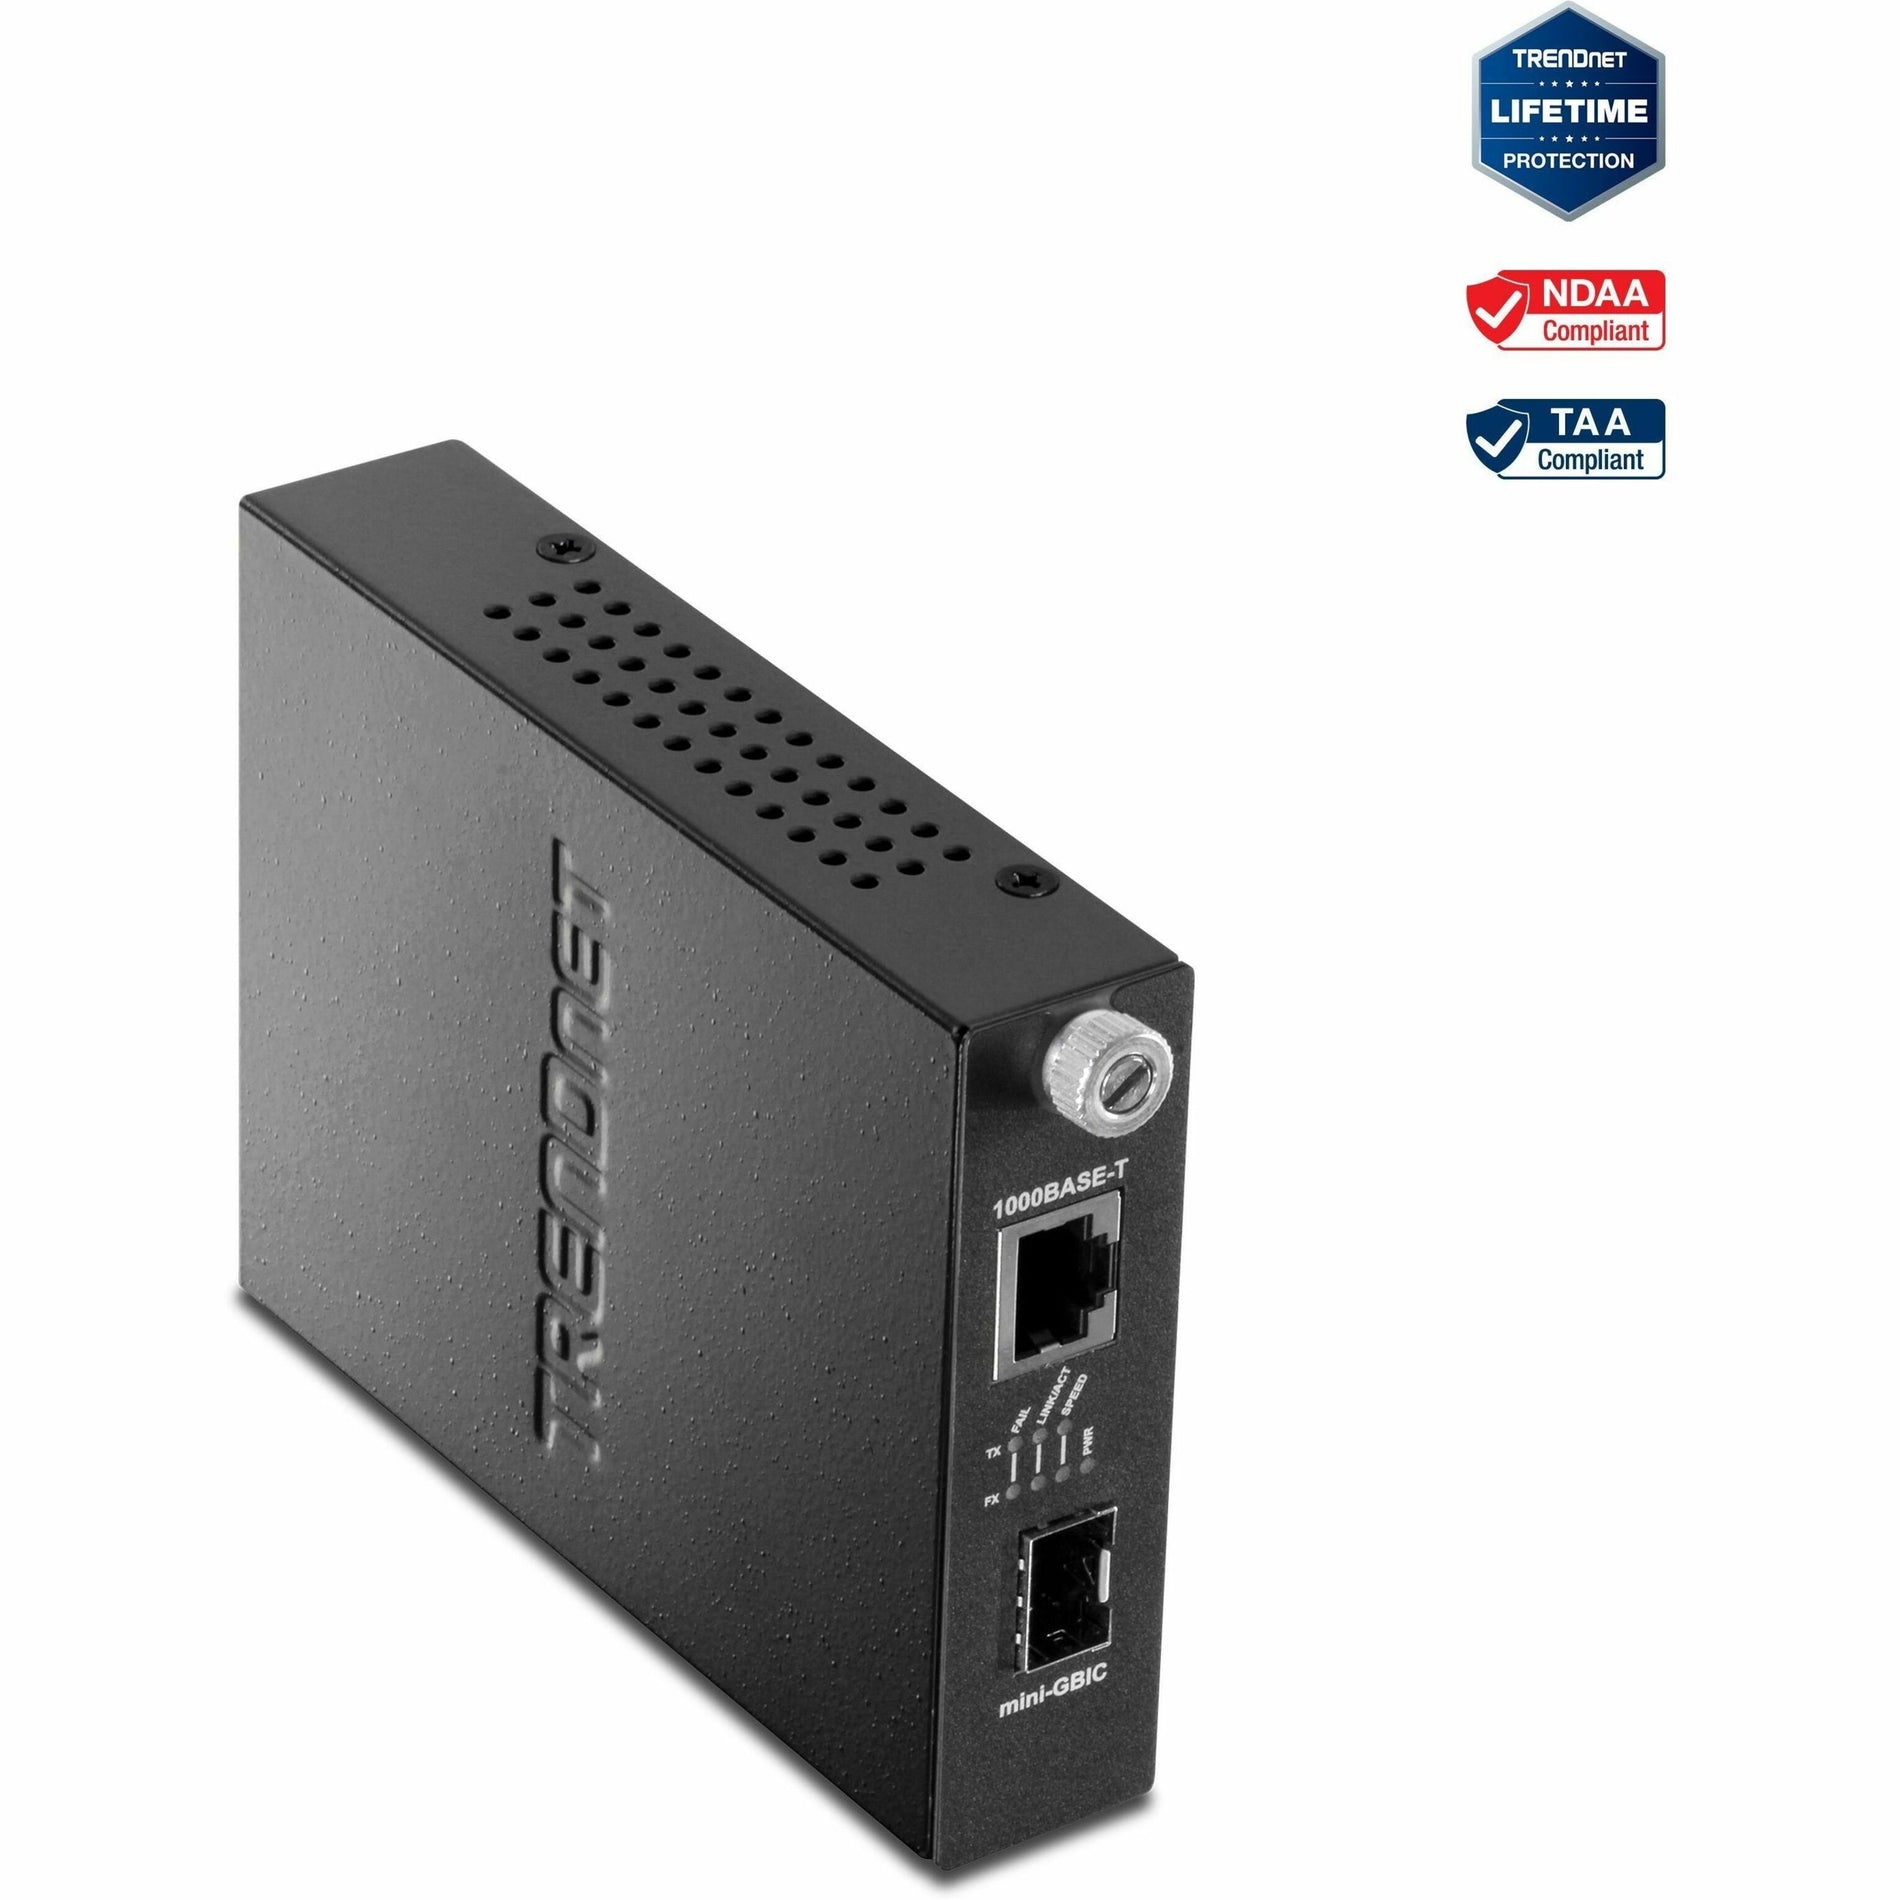 TRENDnet TFC-1000MGA Intelligent 100/1000Mbase-T to SFP Media Converter, Fiber To Ethernet Converter, 1 x 10/100/1000Base-T RJ-45 Port,1 x Mini-GBIC Slot, Lifetime Protection